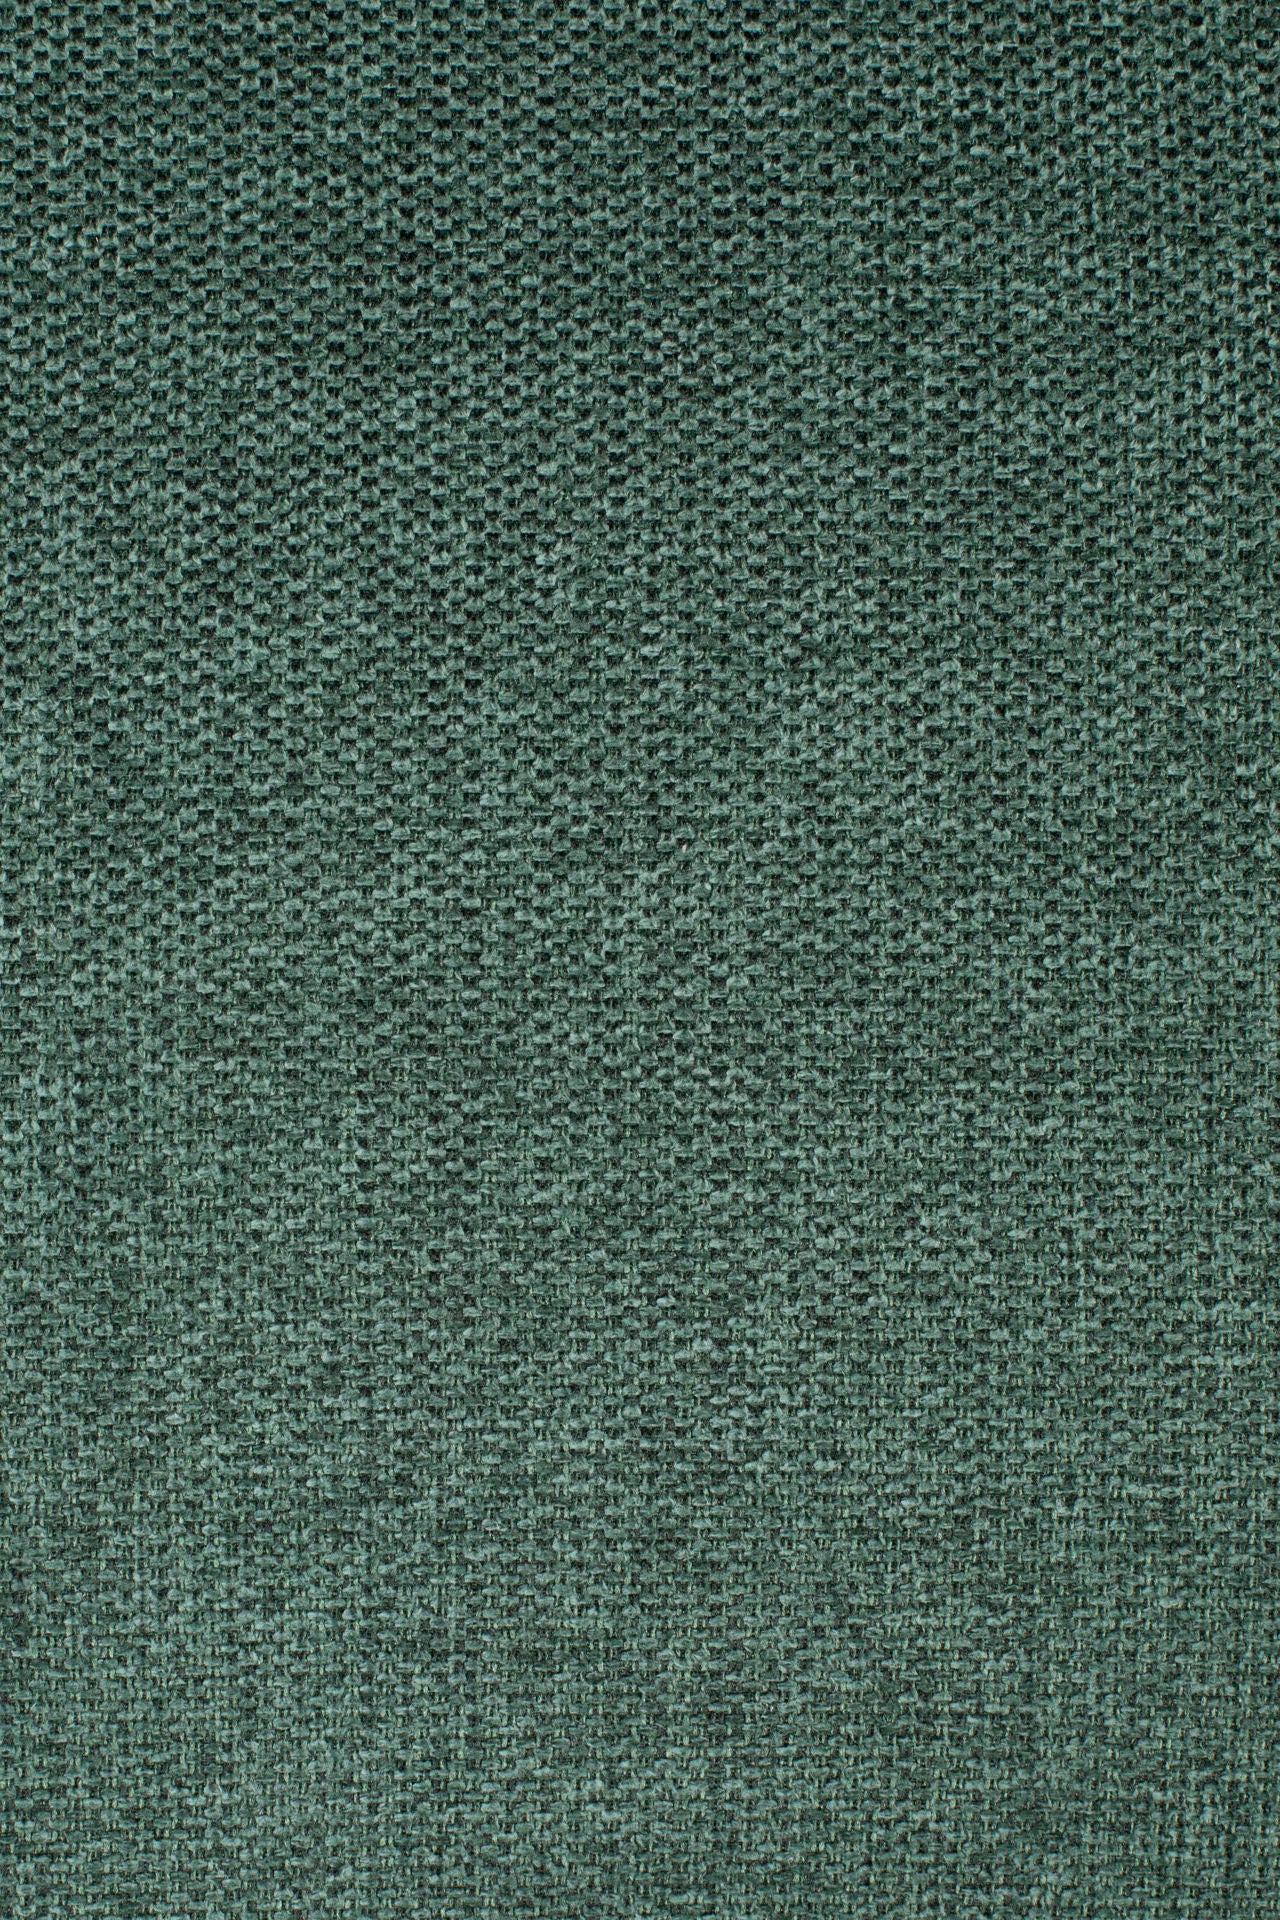 Nancy's Cheviot Kruk - Modern - Donkergroen, Zwart - Polyester, Staal, Pu - 46 cm x 51,5 cm x 95 cm